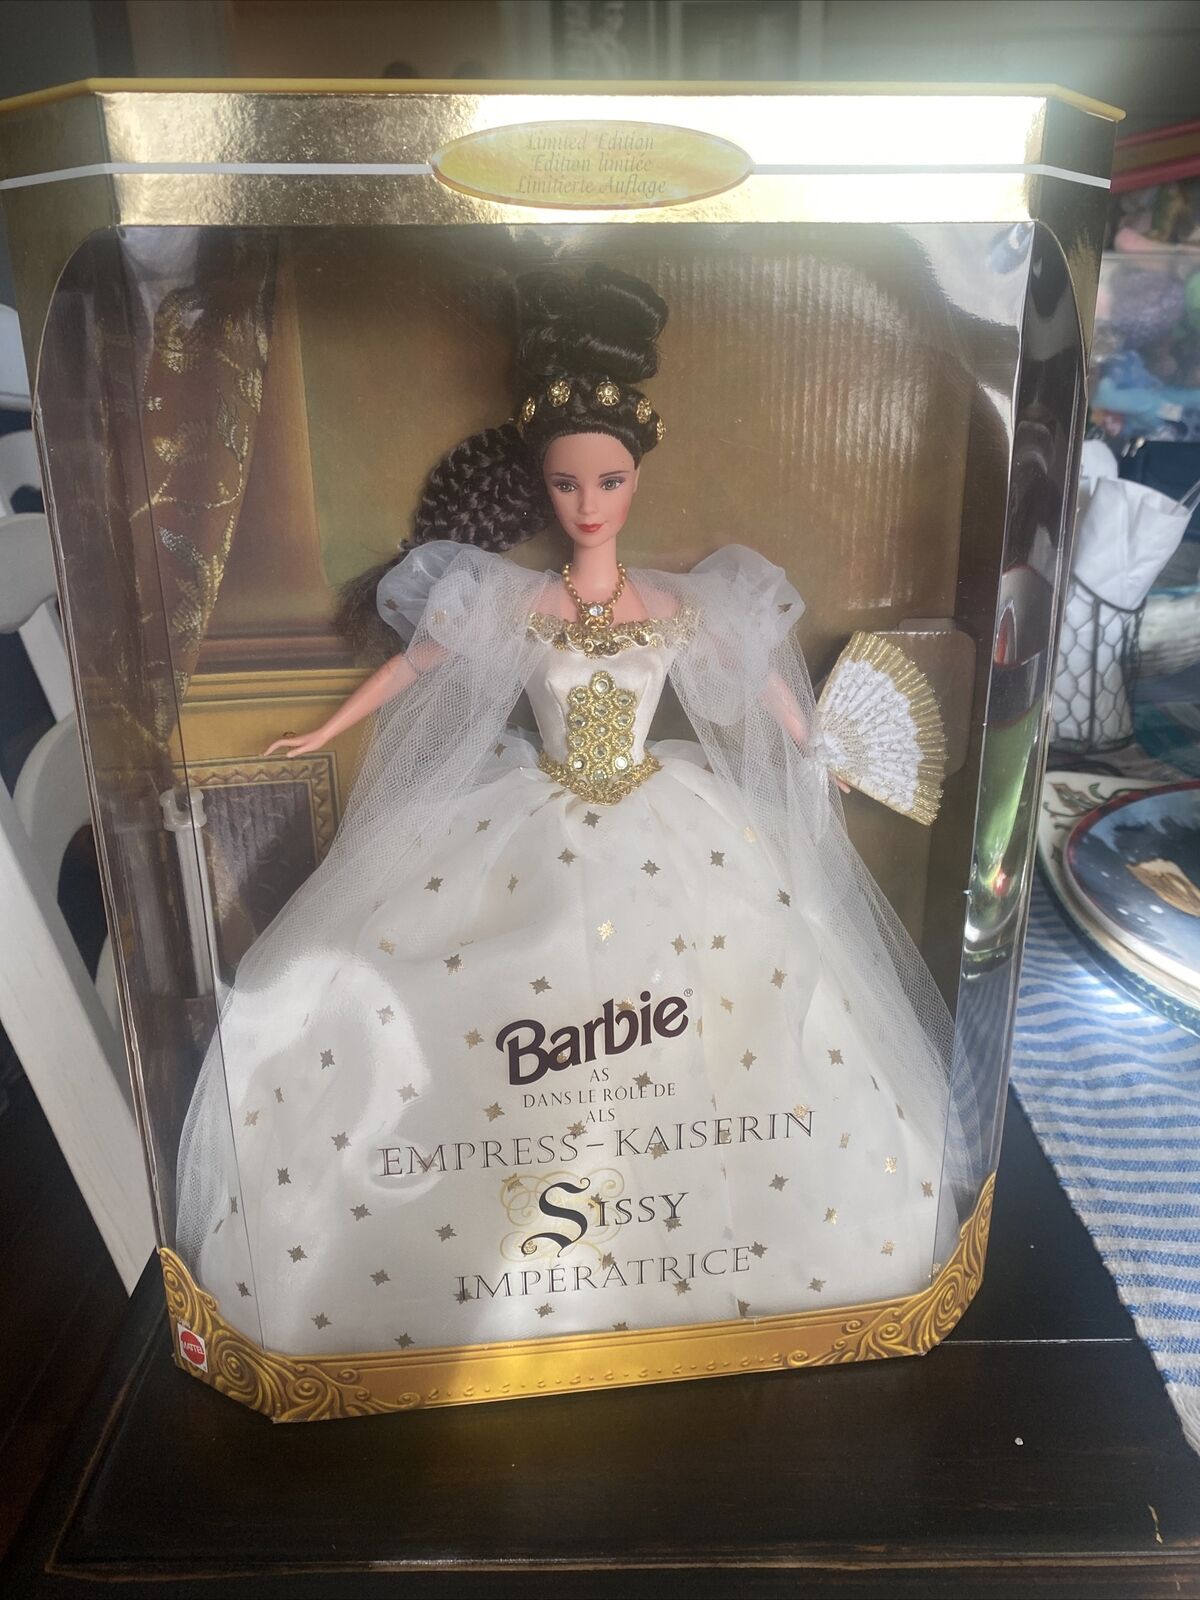 Barbie As Dans Le Role De Als Empress Kaiserin Sissy Imperatrice #15846 Doll New